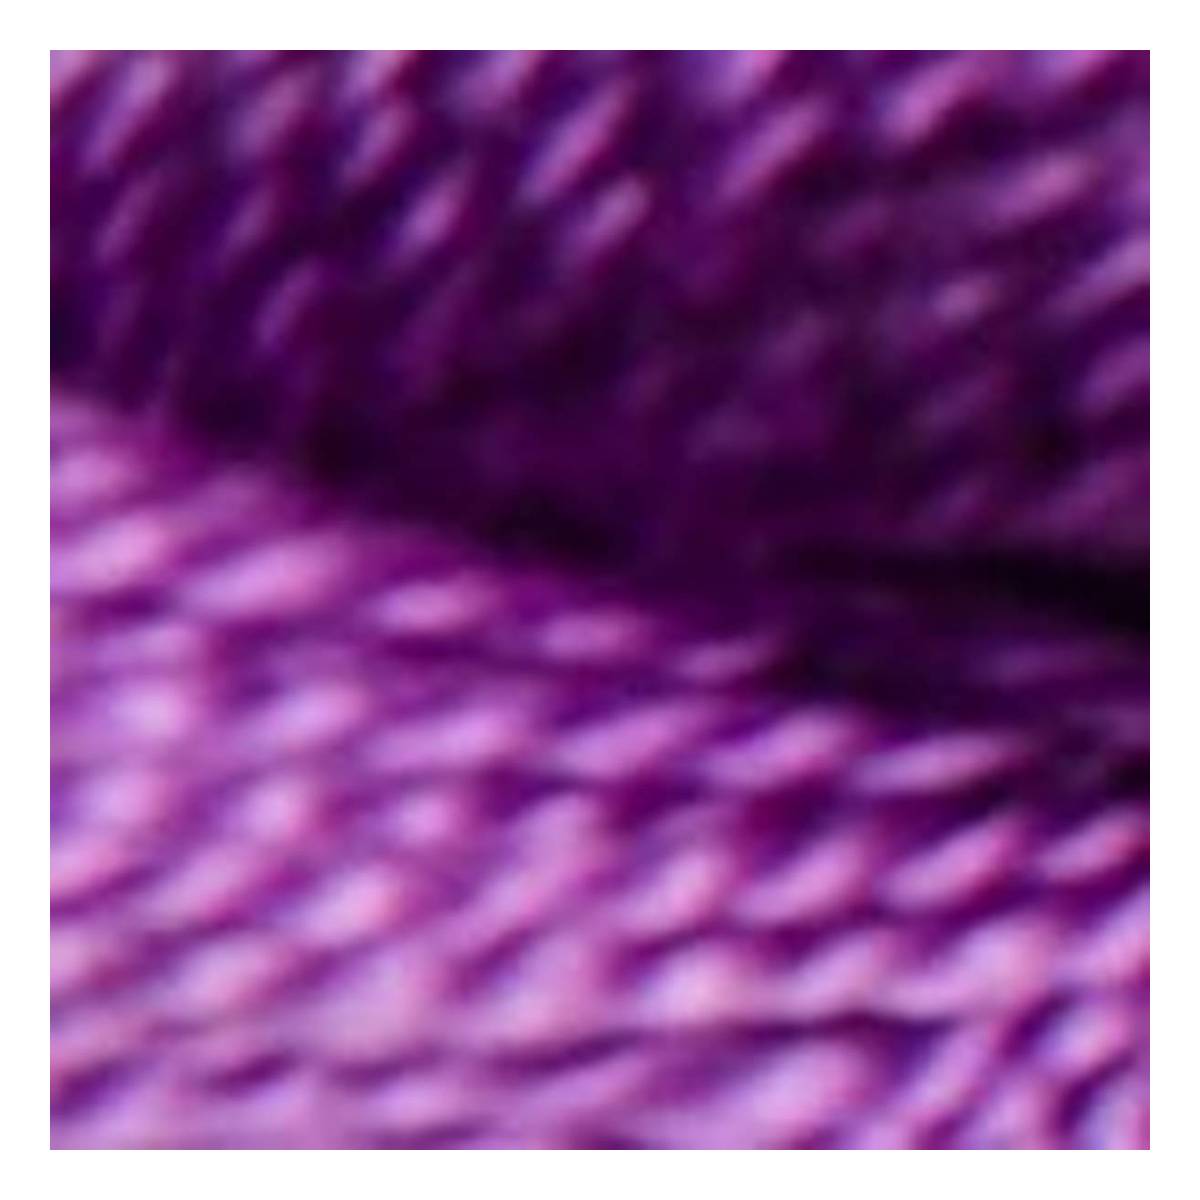 DMC Purple Pearl Cotton Thread Size 5 25m (552)